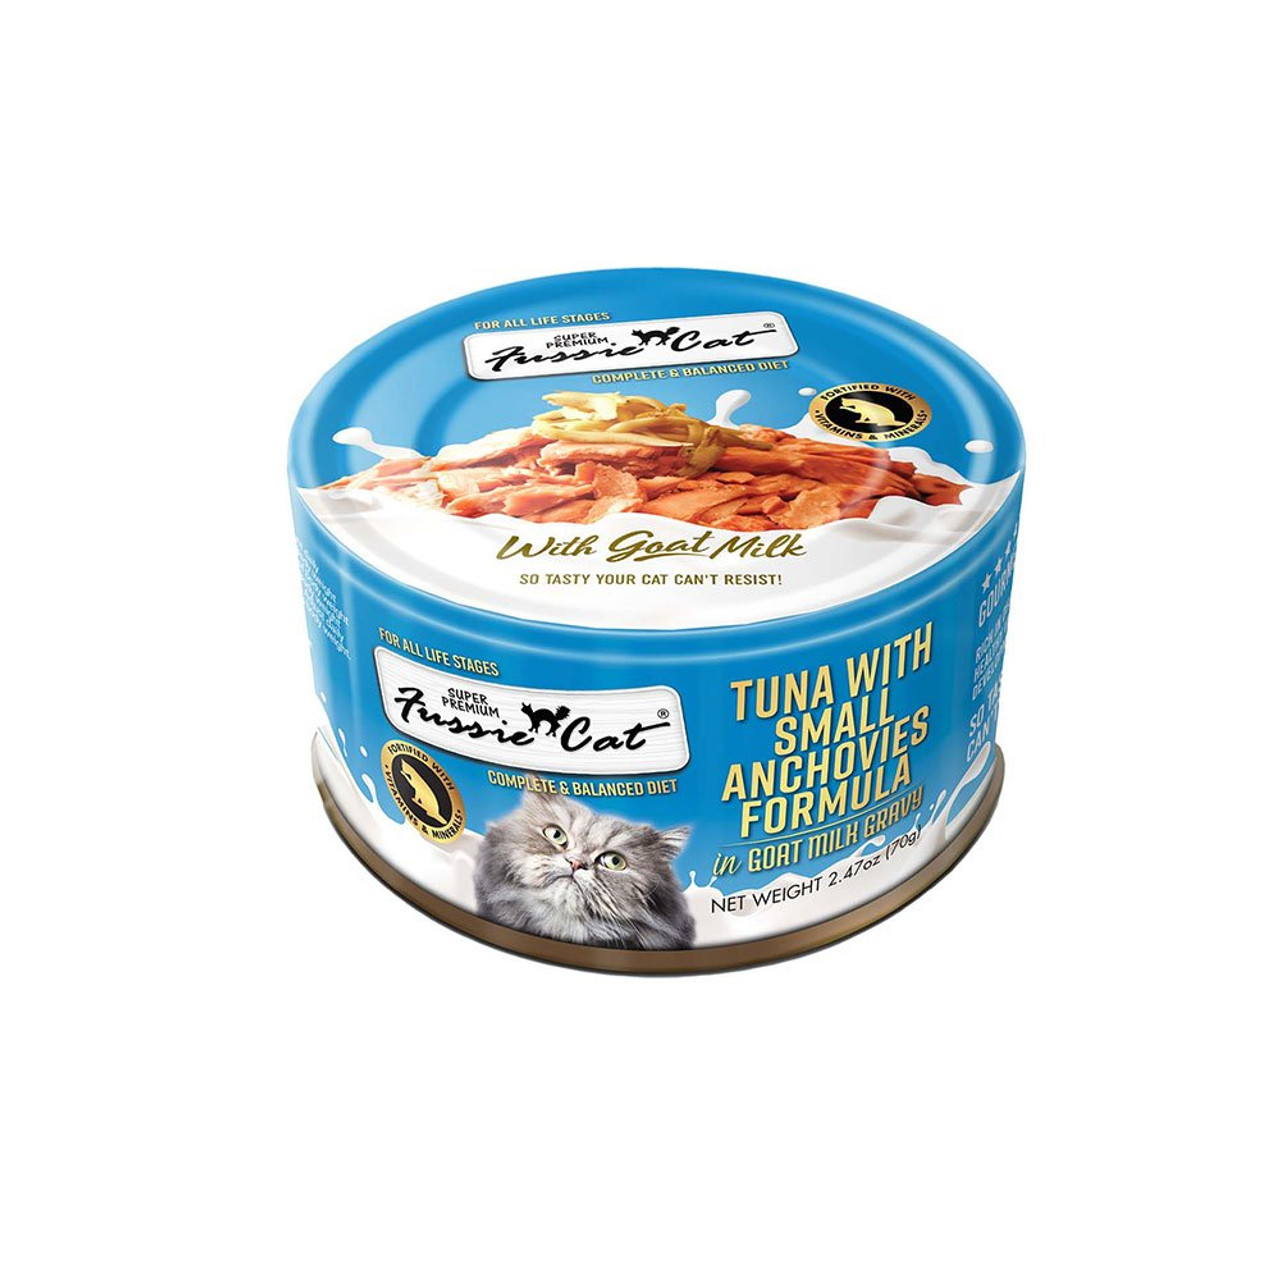 PureBites Mixers Wild Skipjack Tuna in Water Cat Food 12 / 1.76 oz